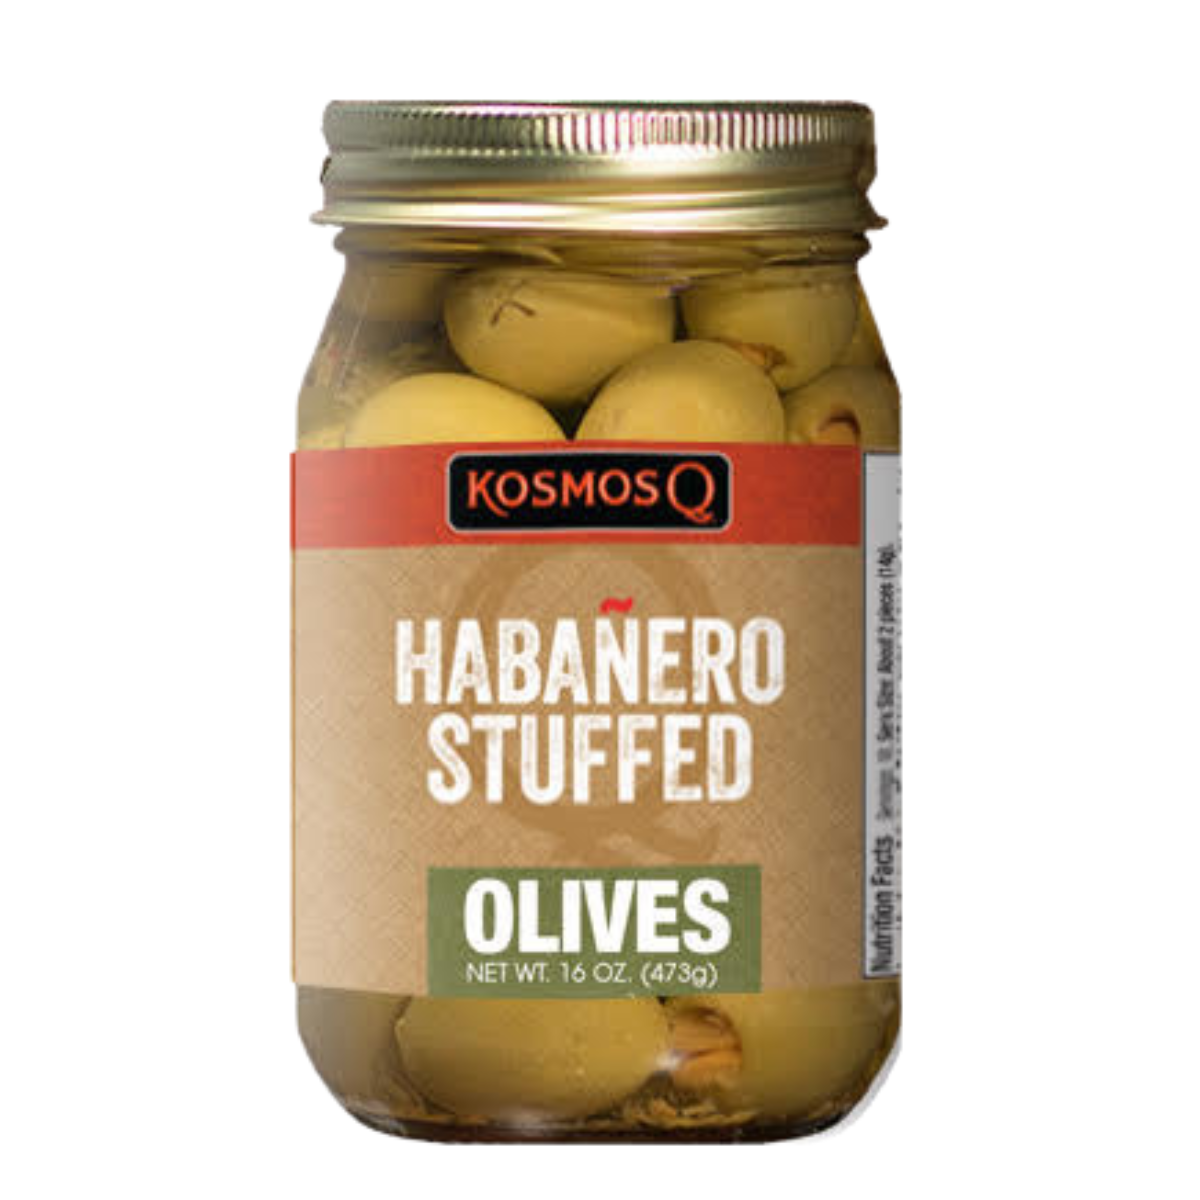 Kosmos Q BBQ Products & Supplies Habanero Stuffed Olives